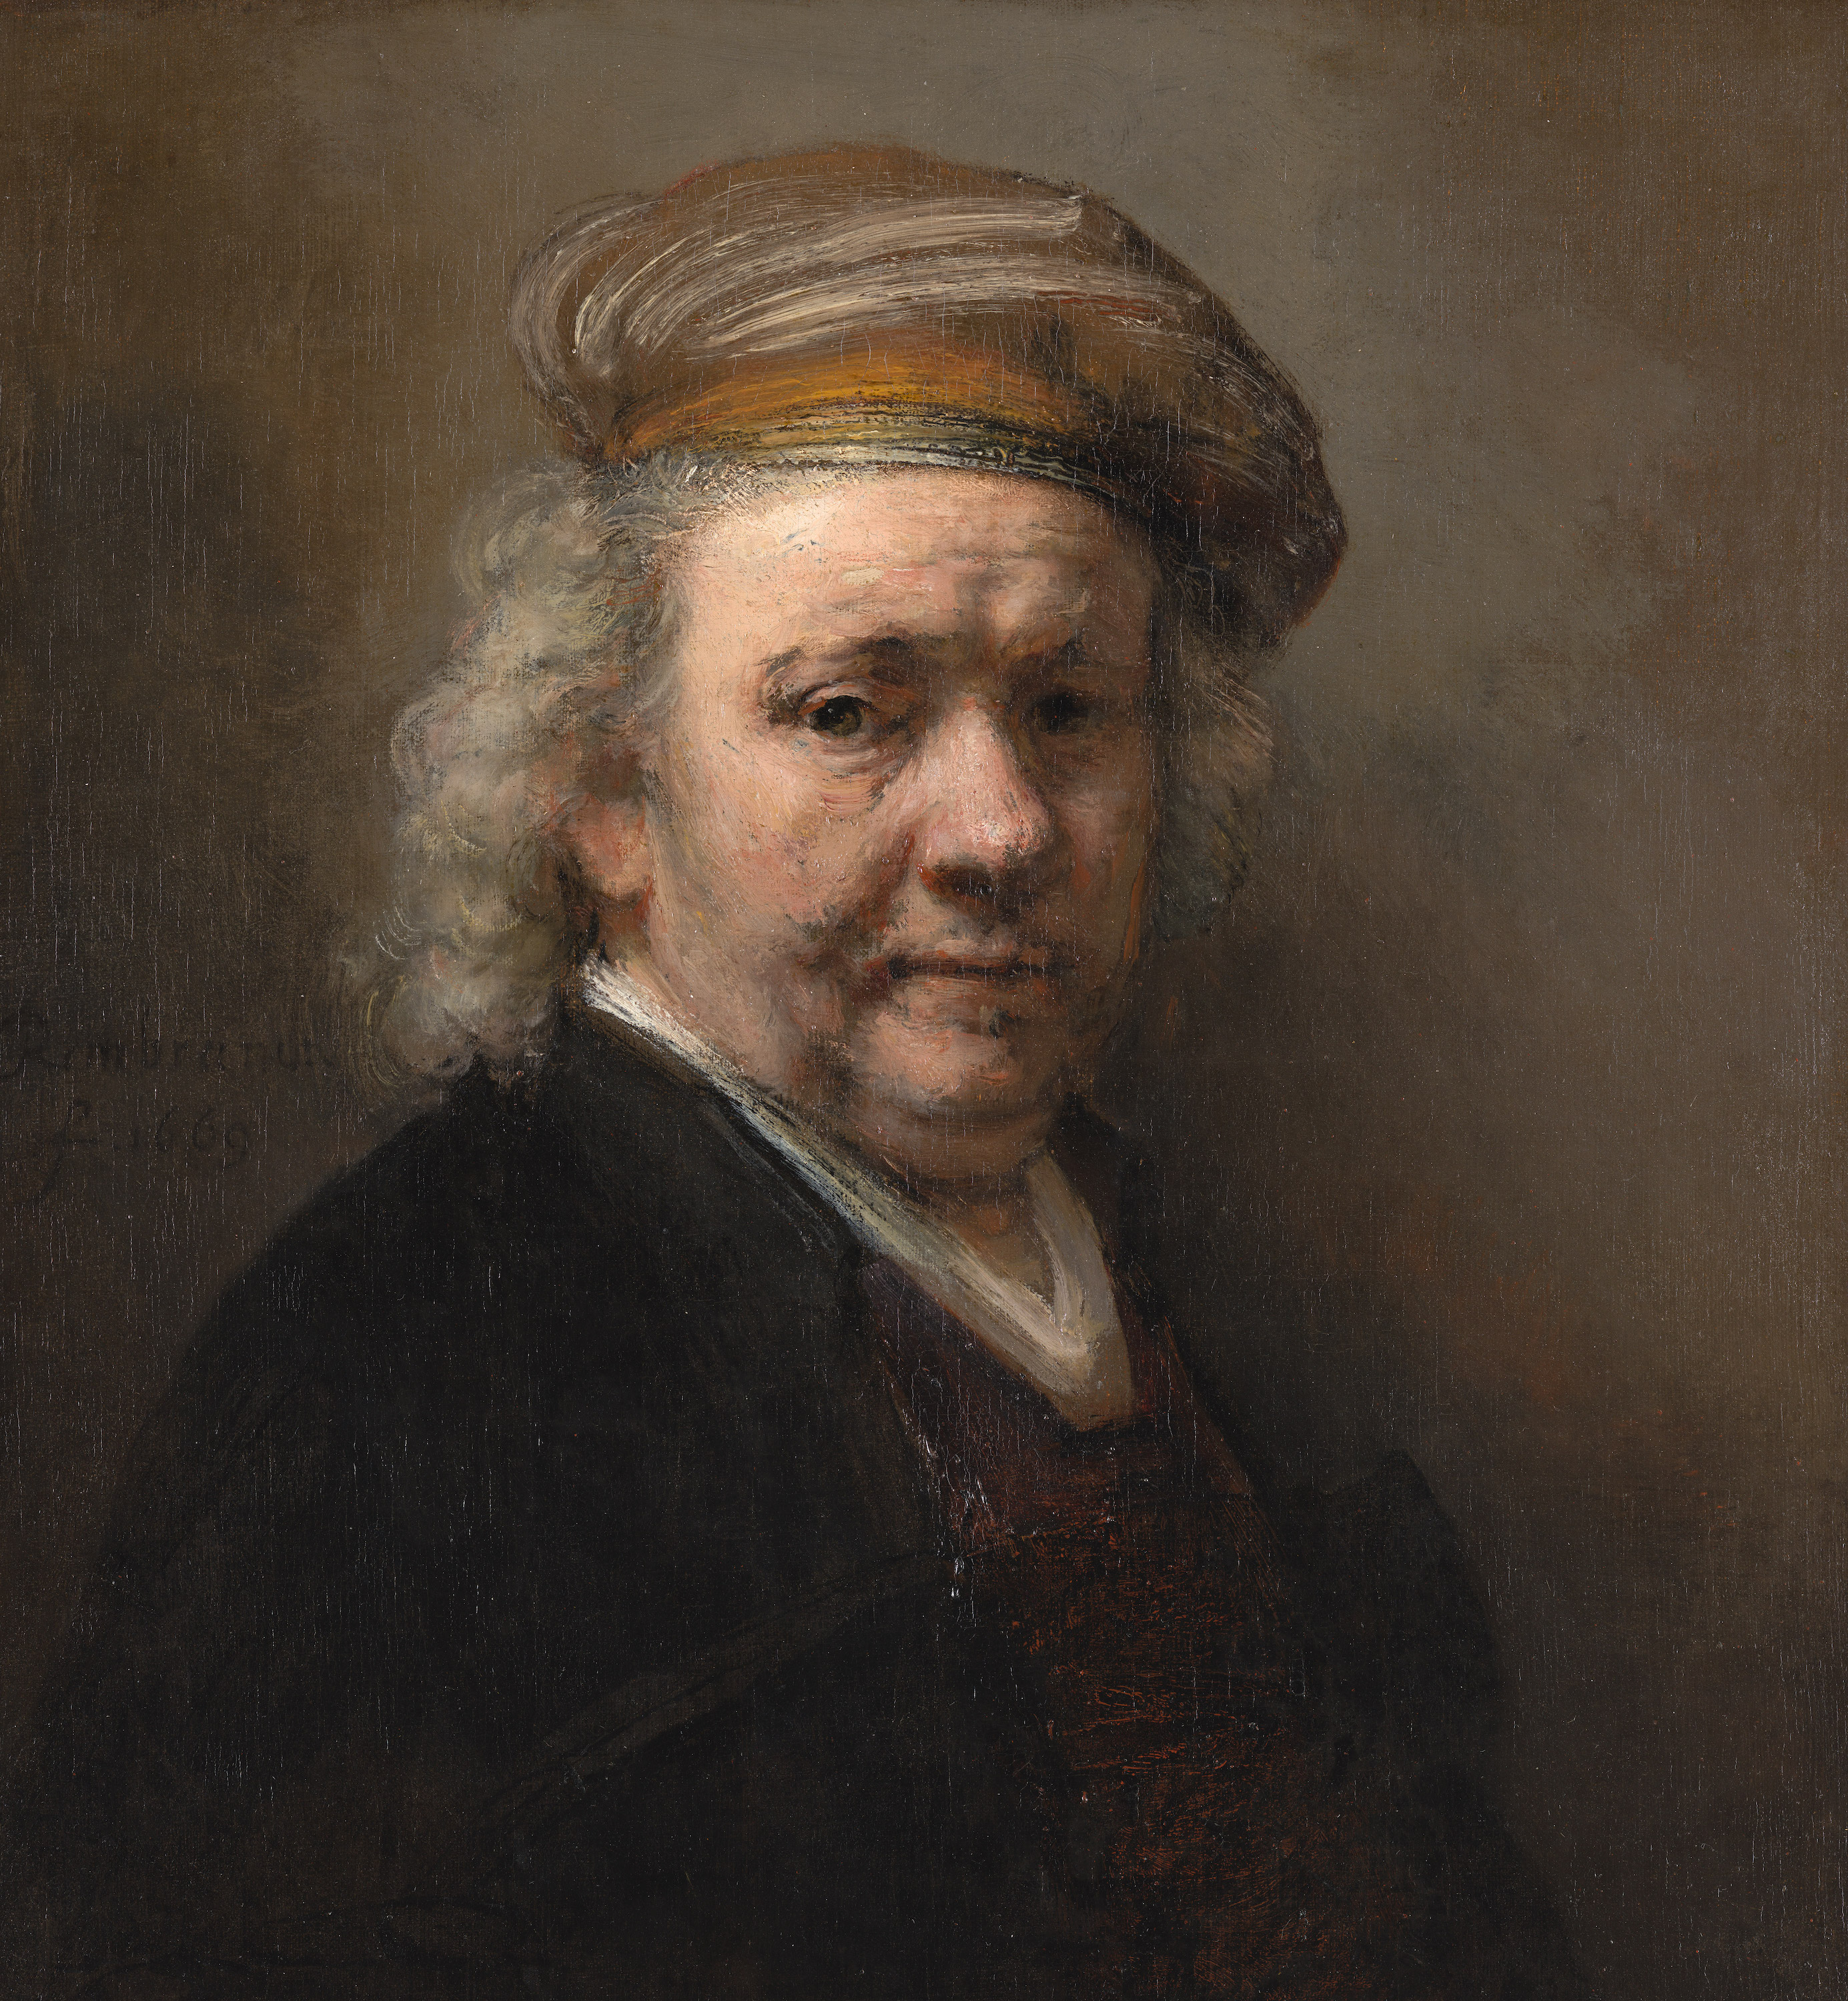 Autoportret by Rembrandt van Rijn - 1669 - 65.4 x 60.2 cm 